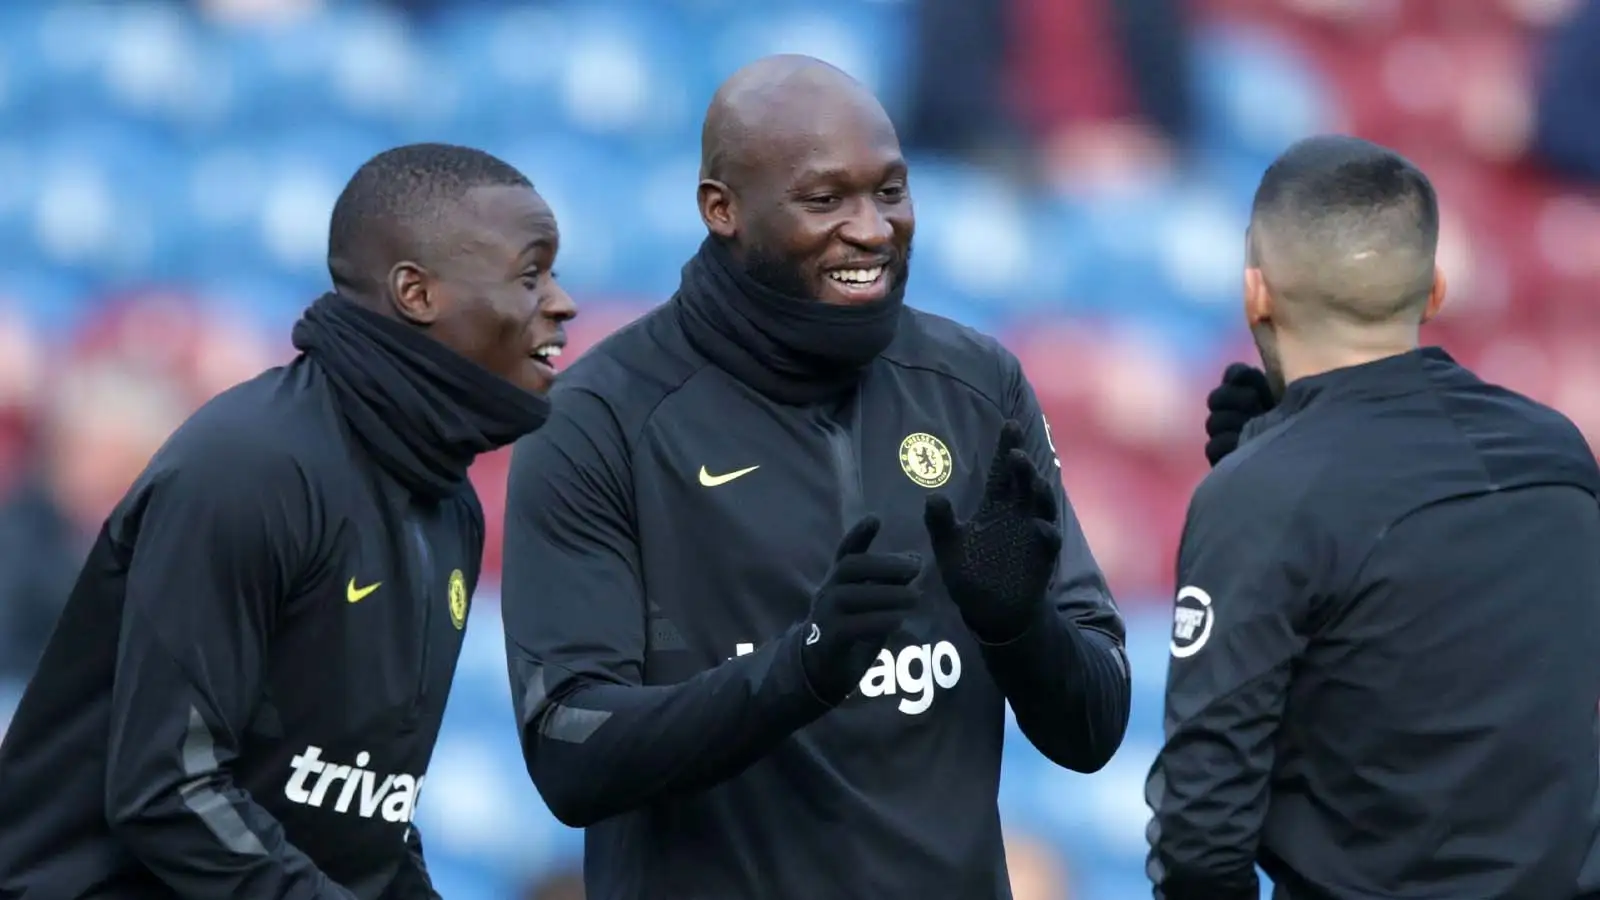 Romelu Lukaku of Chelsea warms up